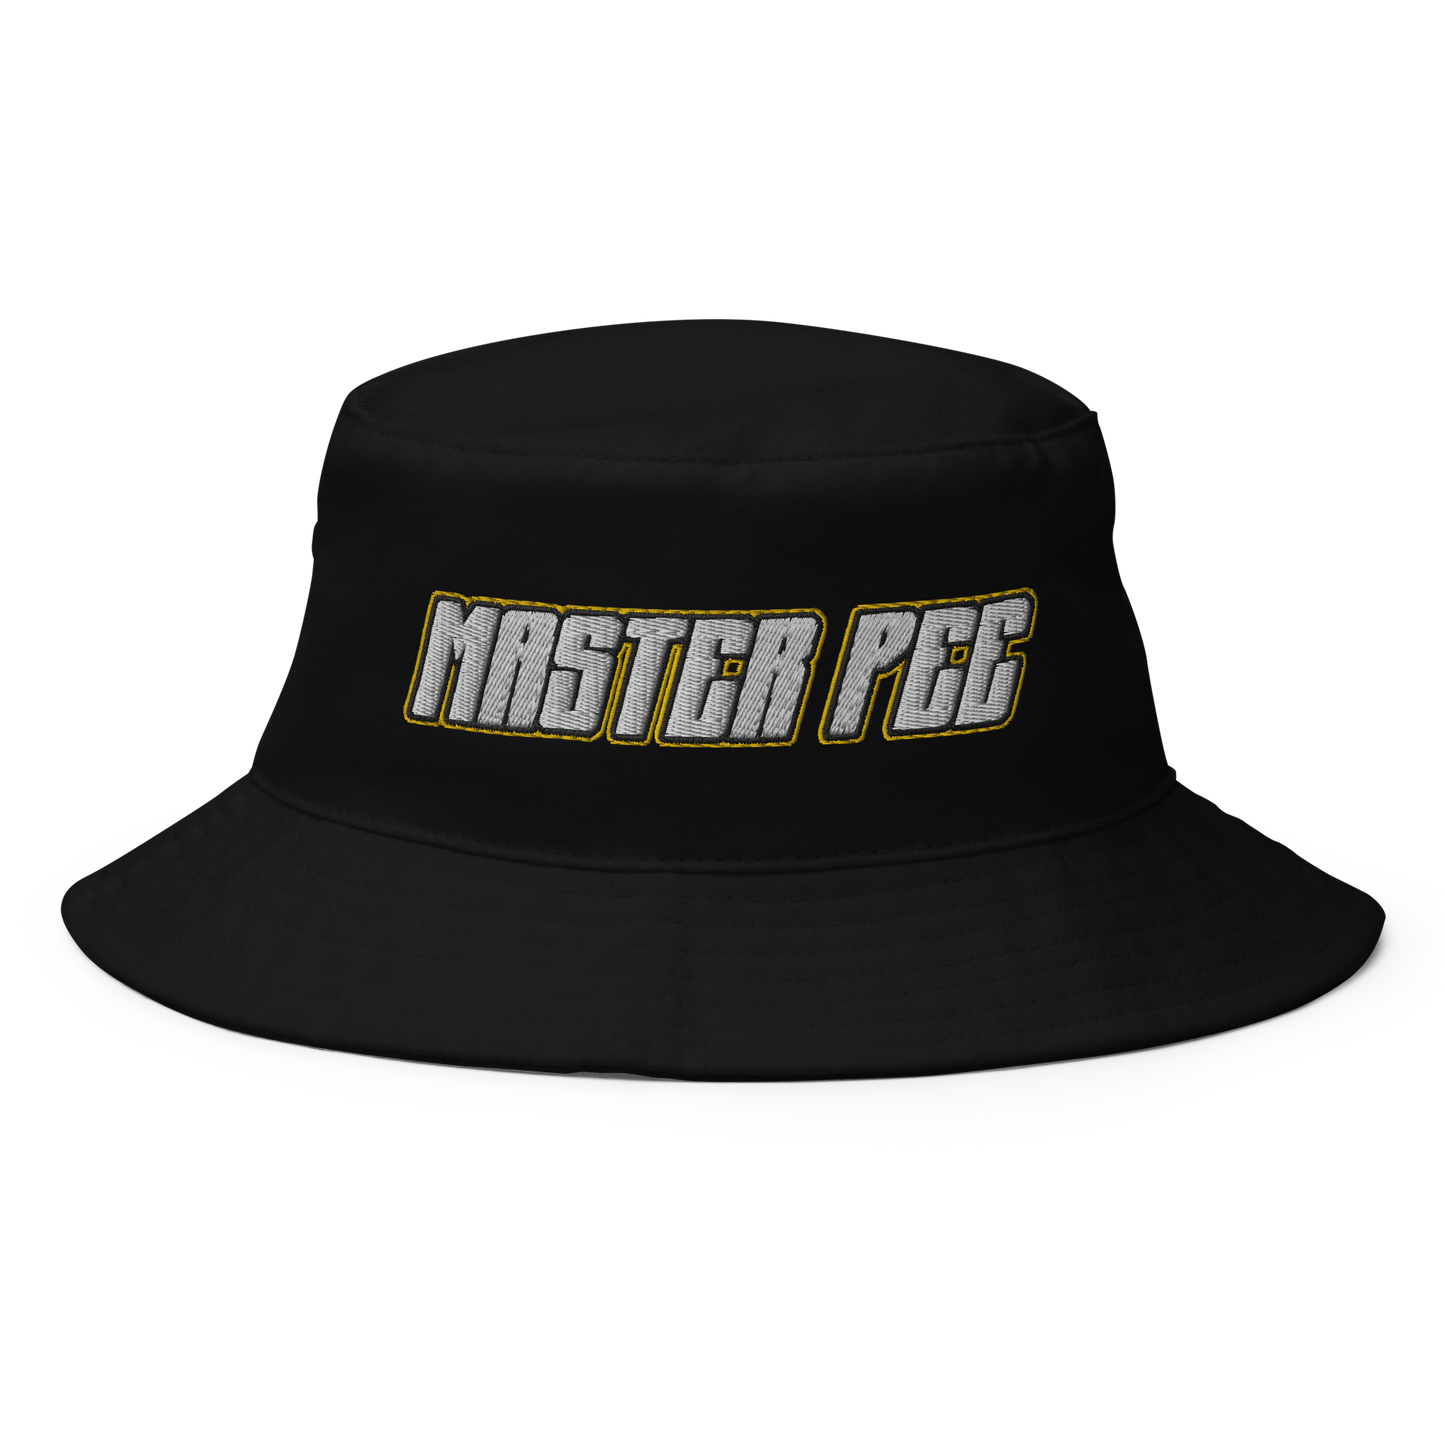 Master Pee Bucket Hat